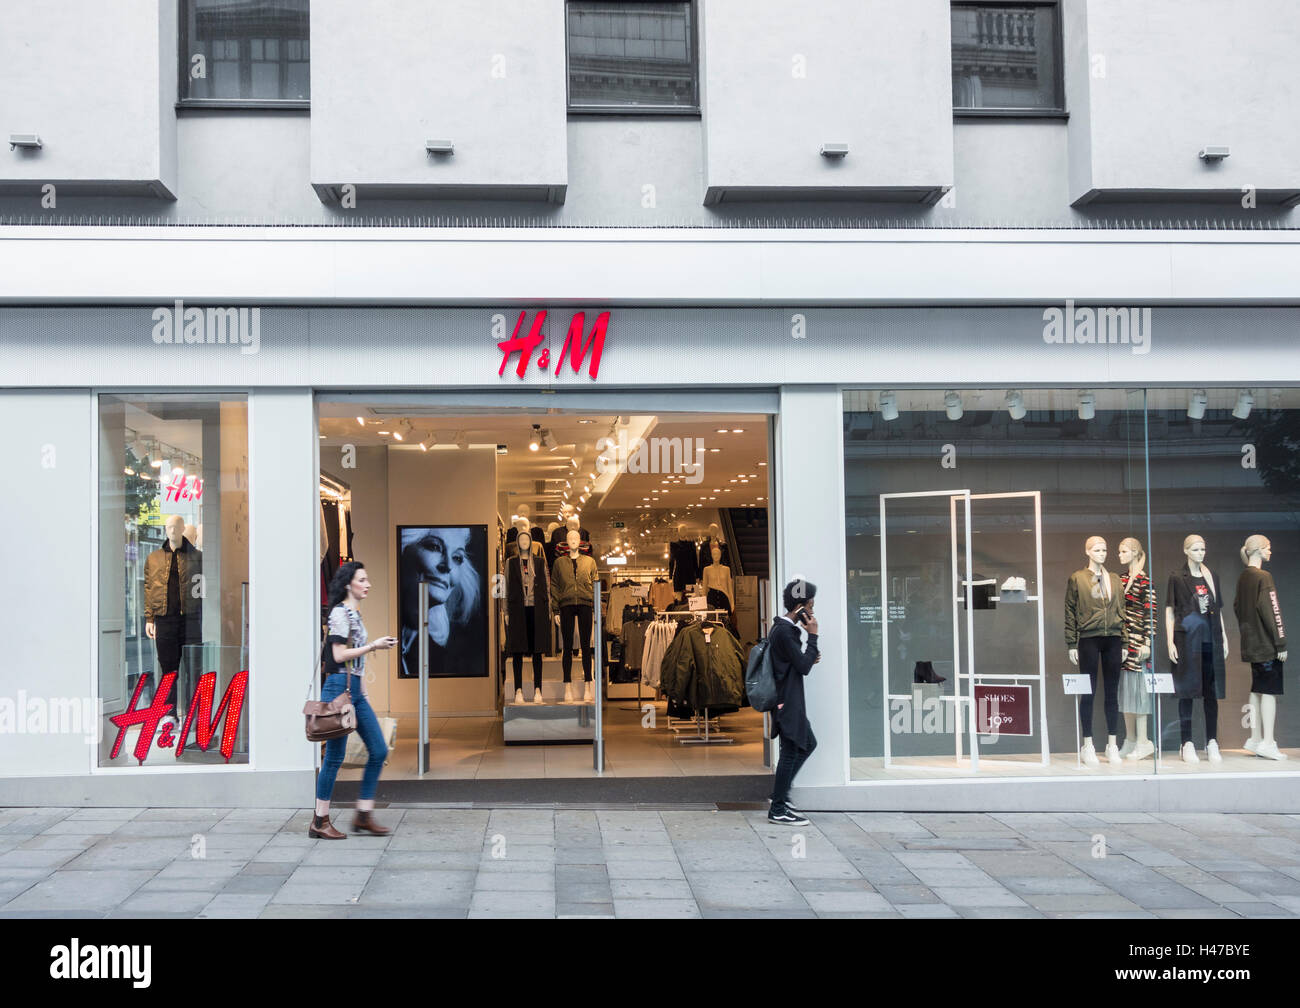 H&M store on Northumberland street in Newcastle upon Tyne, England. UK  Stock Photo - Alamy